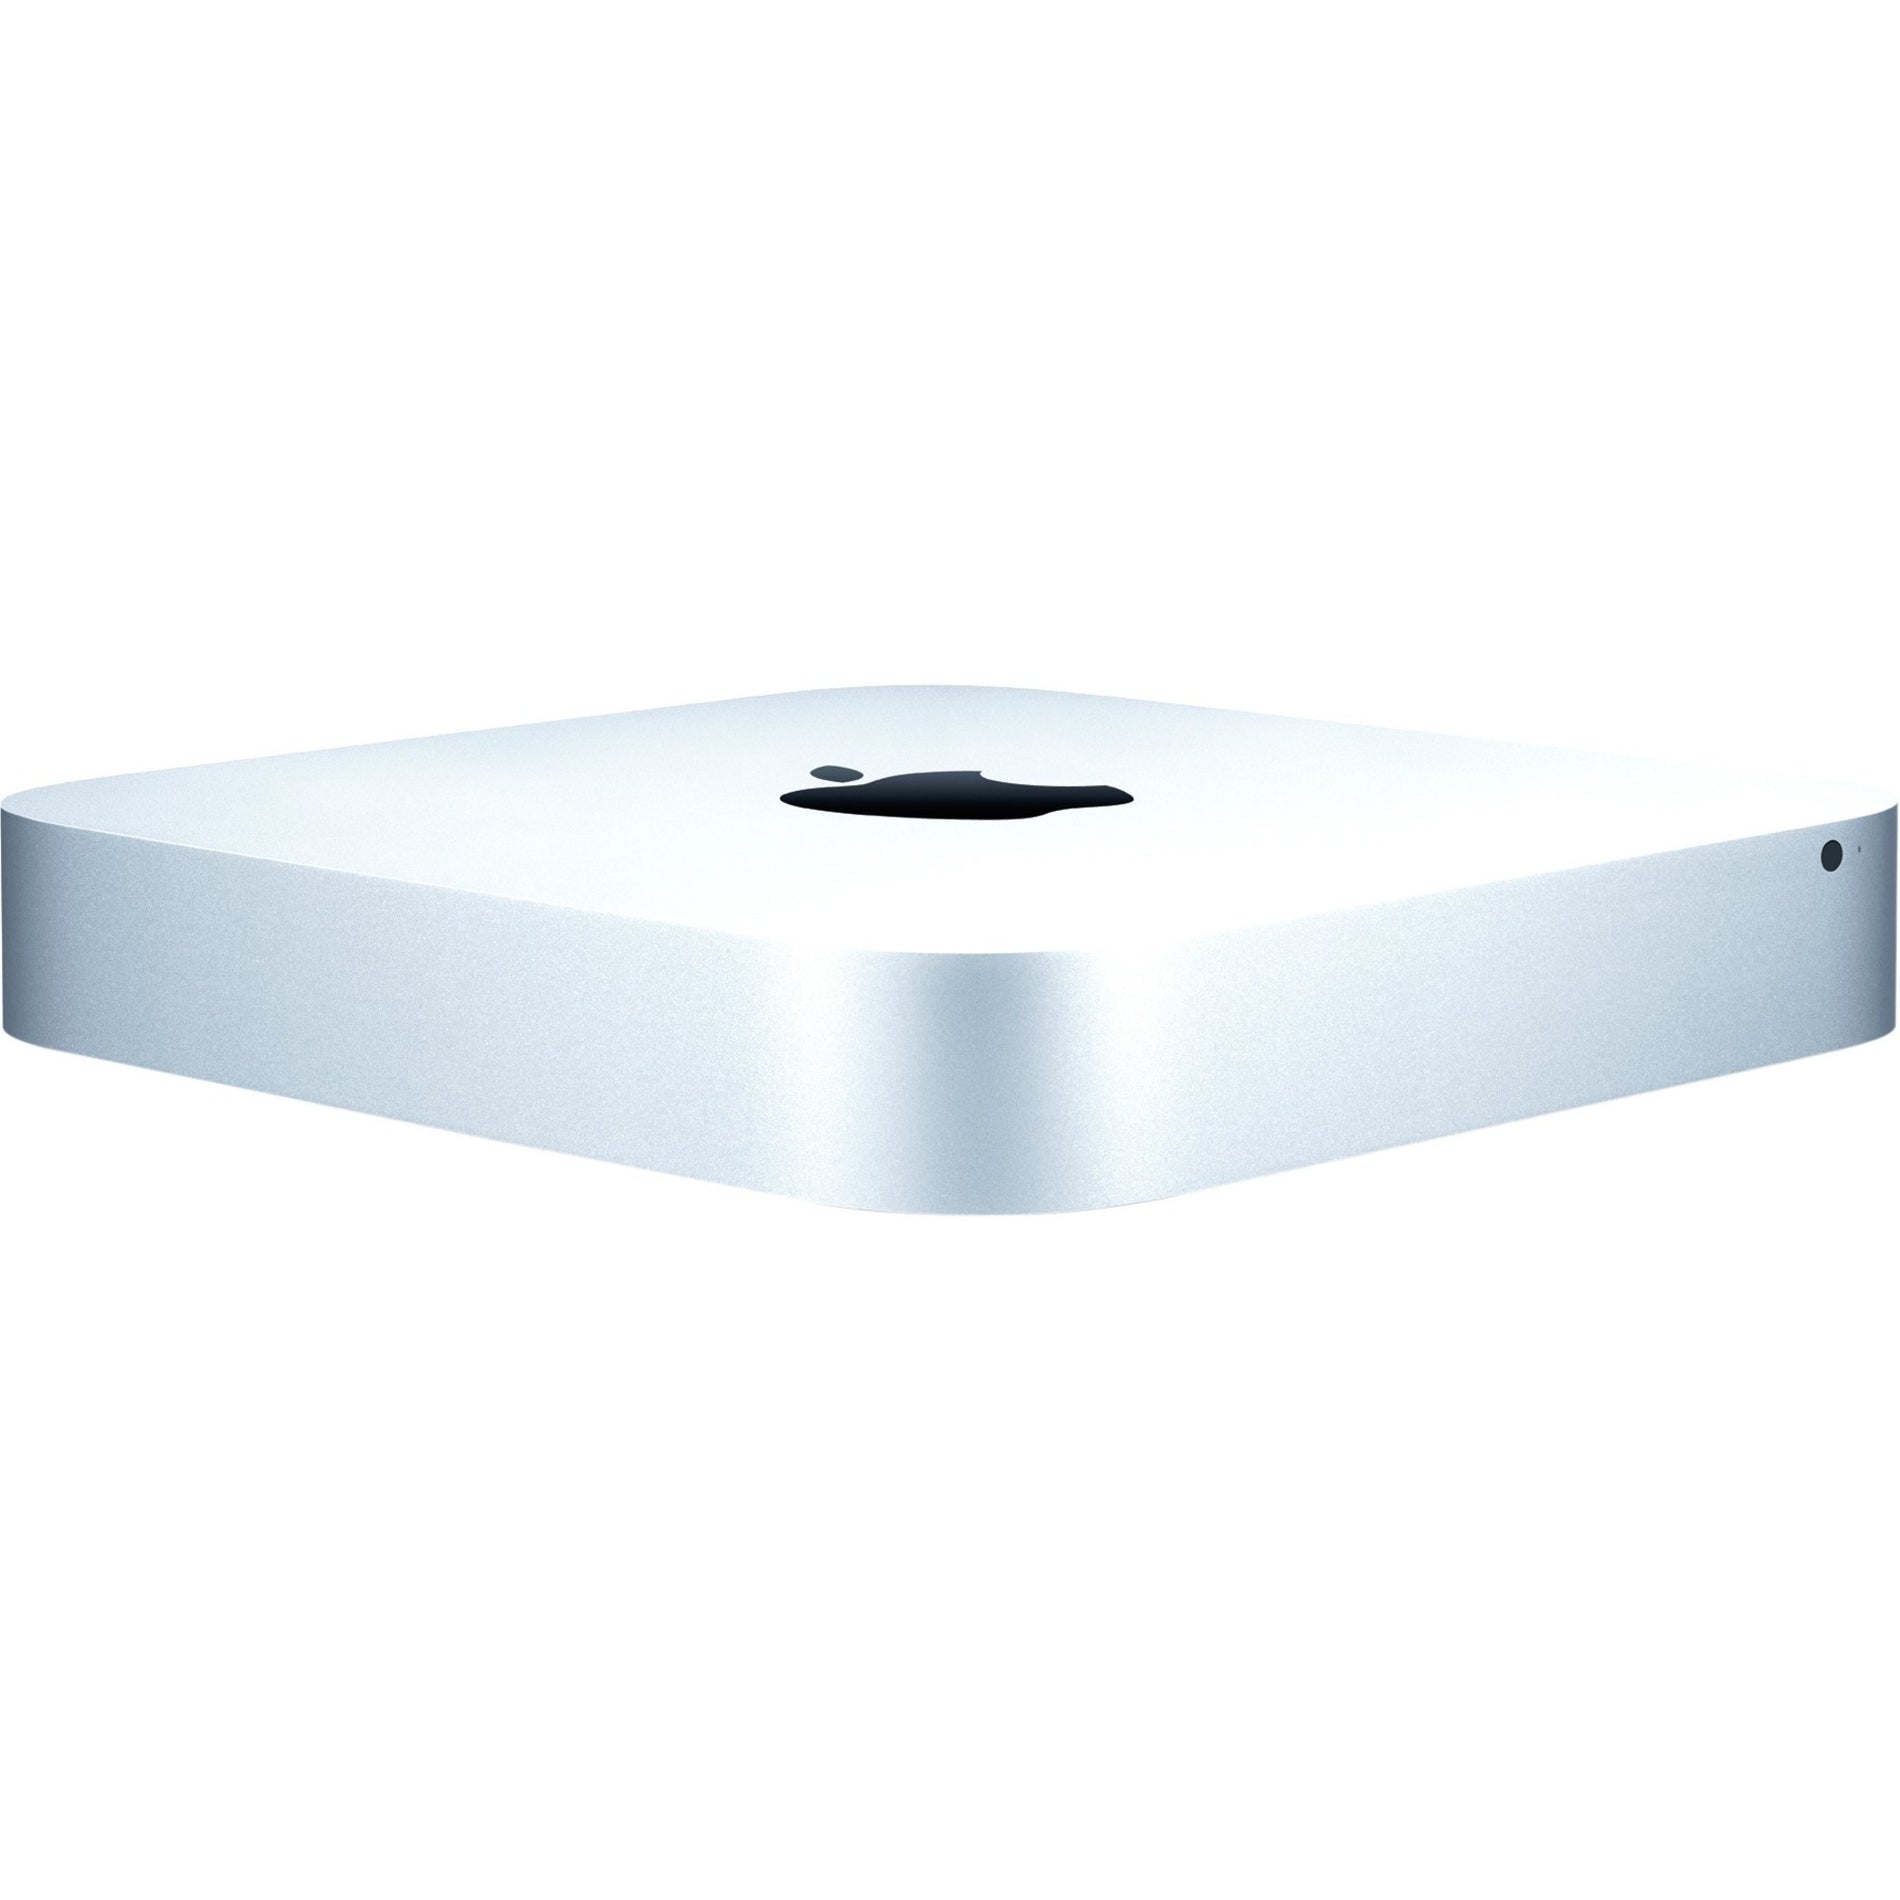 Apple MGEM2LL/A Mac mini 1.4 GHz Desktop Computer, 4GB RAM, 500GB HDD, Mac OS X 10.10 Yosemite